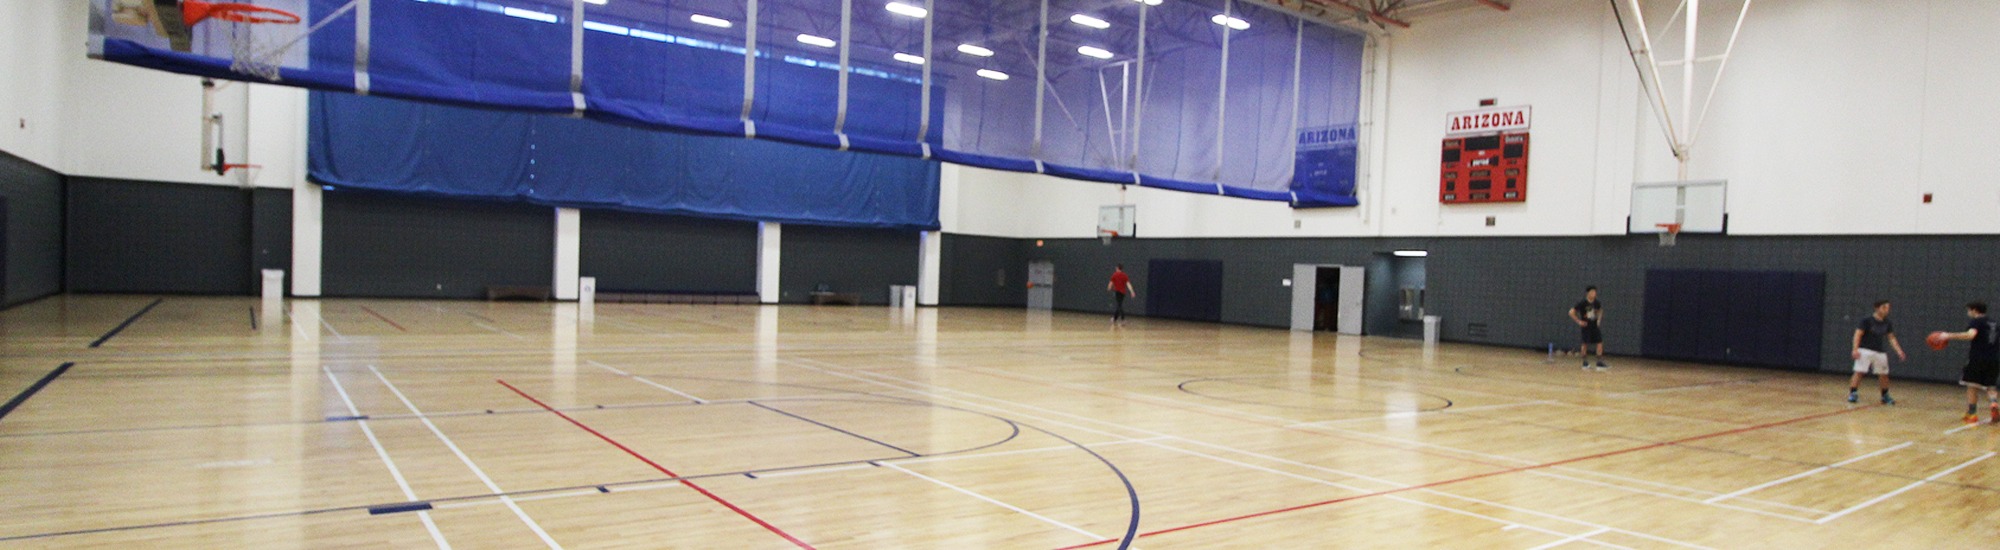 Group of people playing basketball at North Gym, UArizona